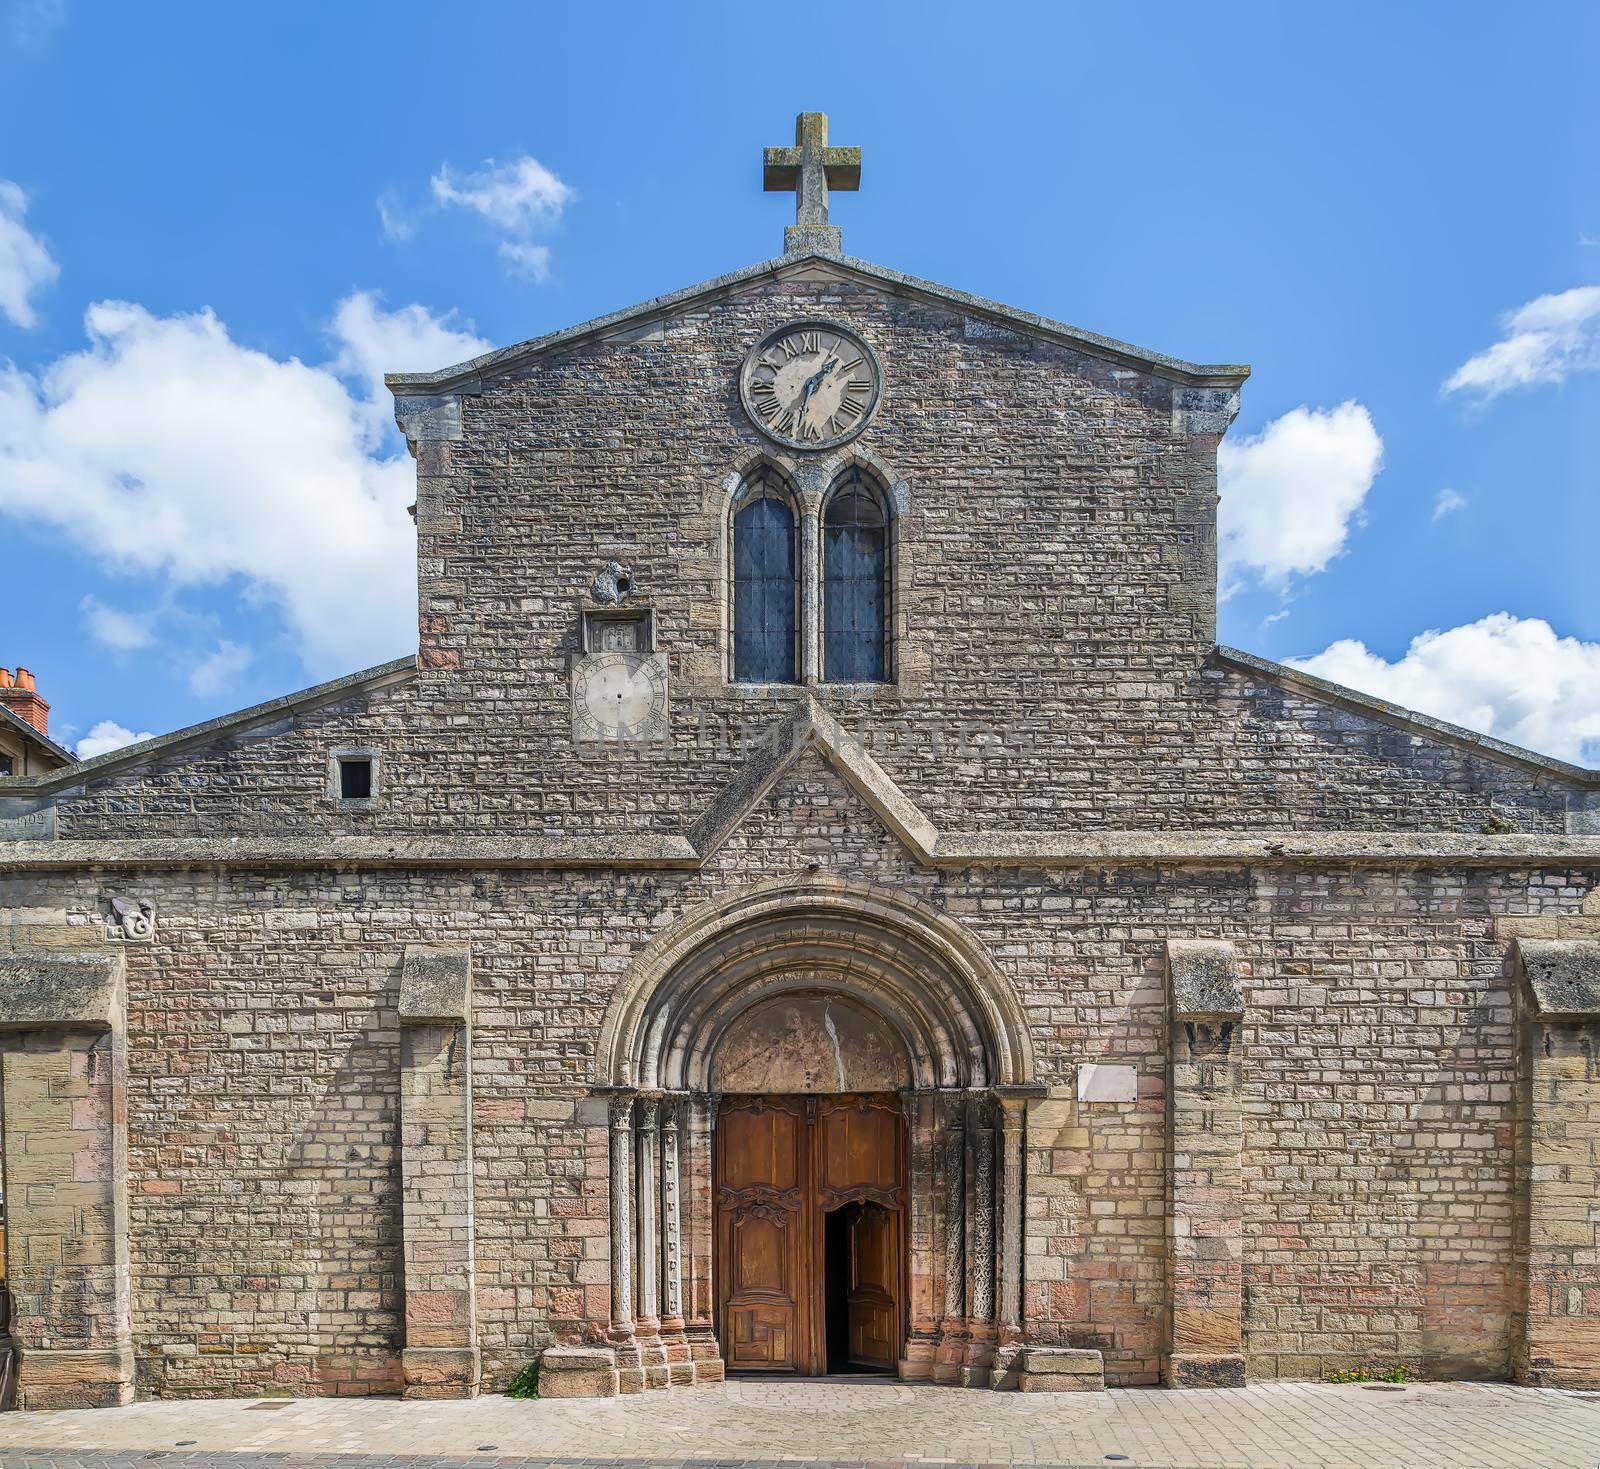 Saint Madeleine Church, Tournus, France by borisb17